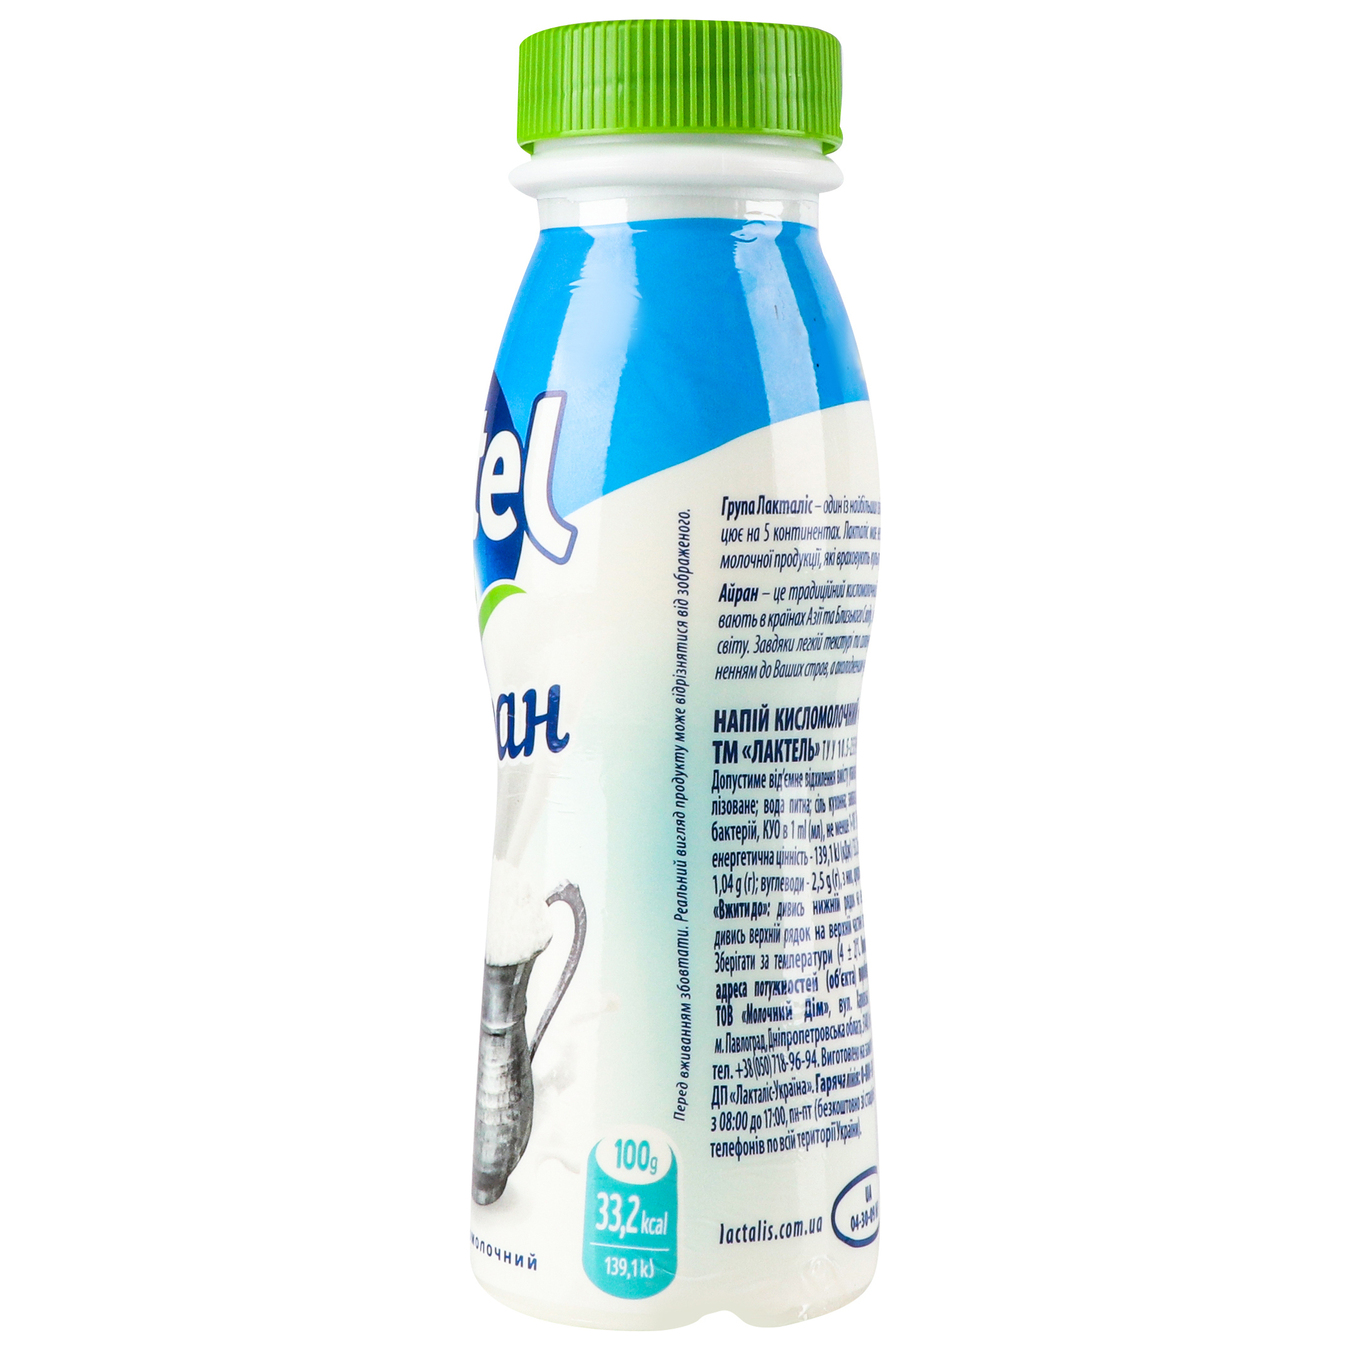 Fermented milk drink Lactel Ayran drinking bottle 1.6% 185g 3